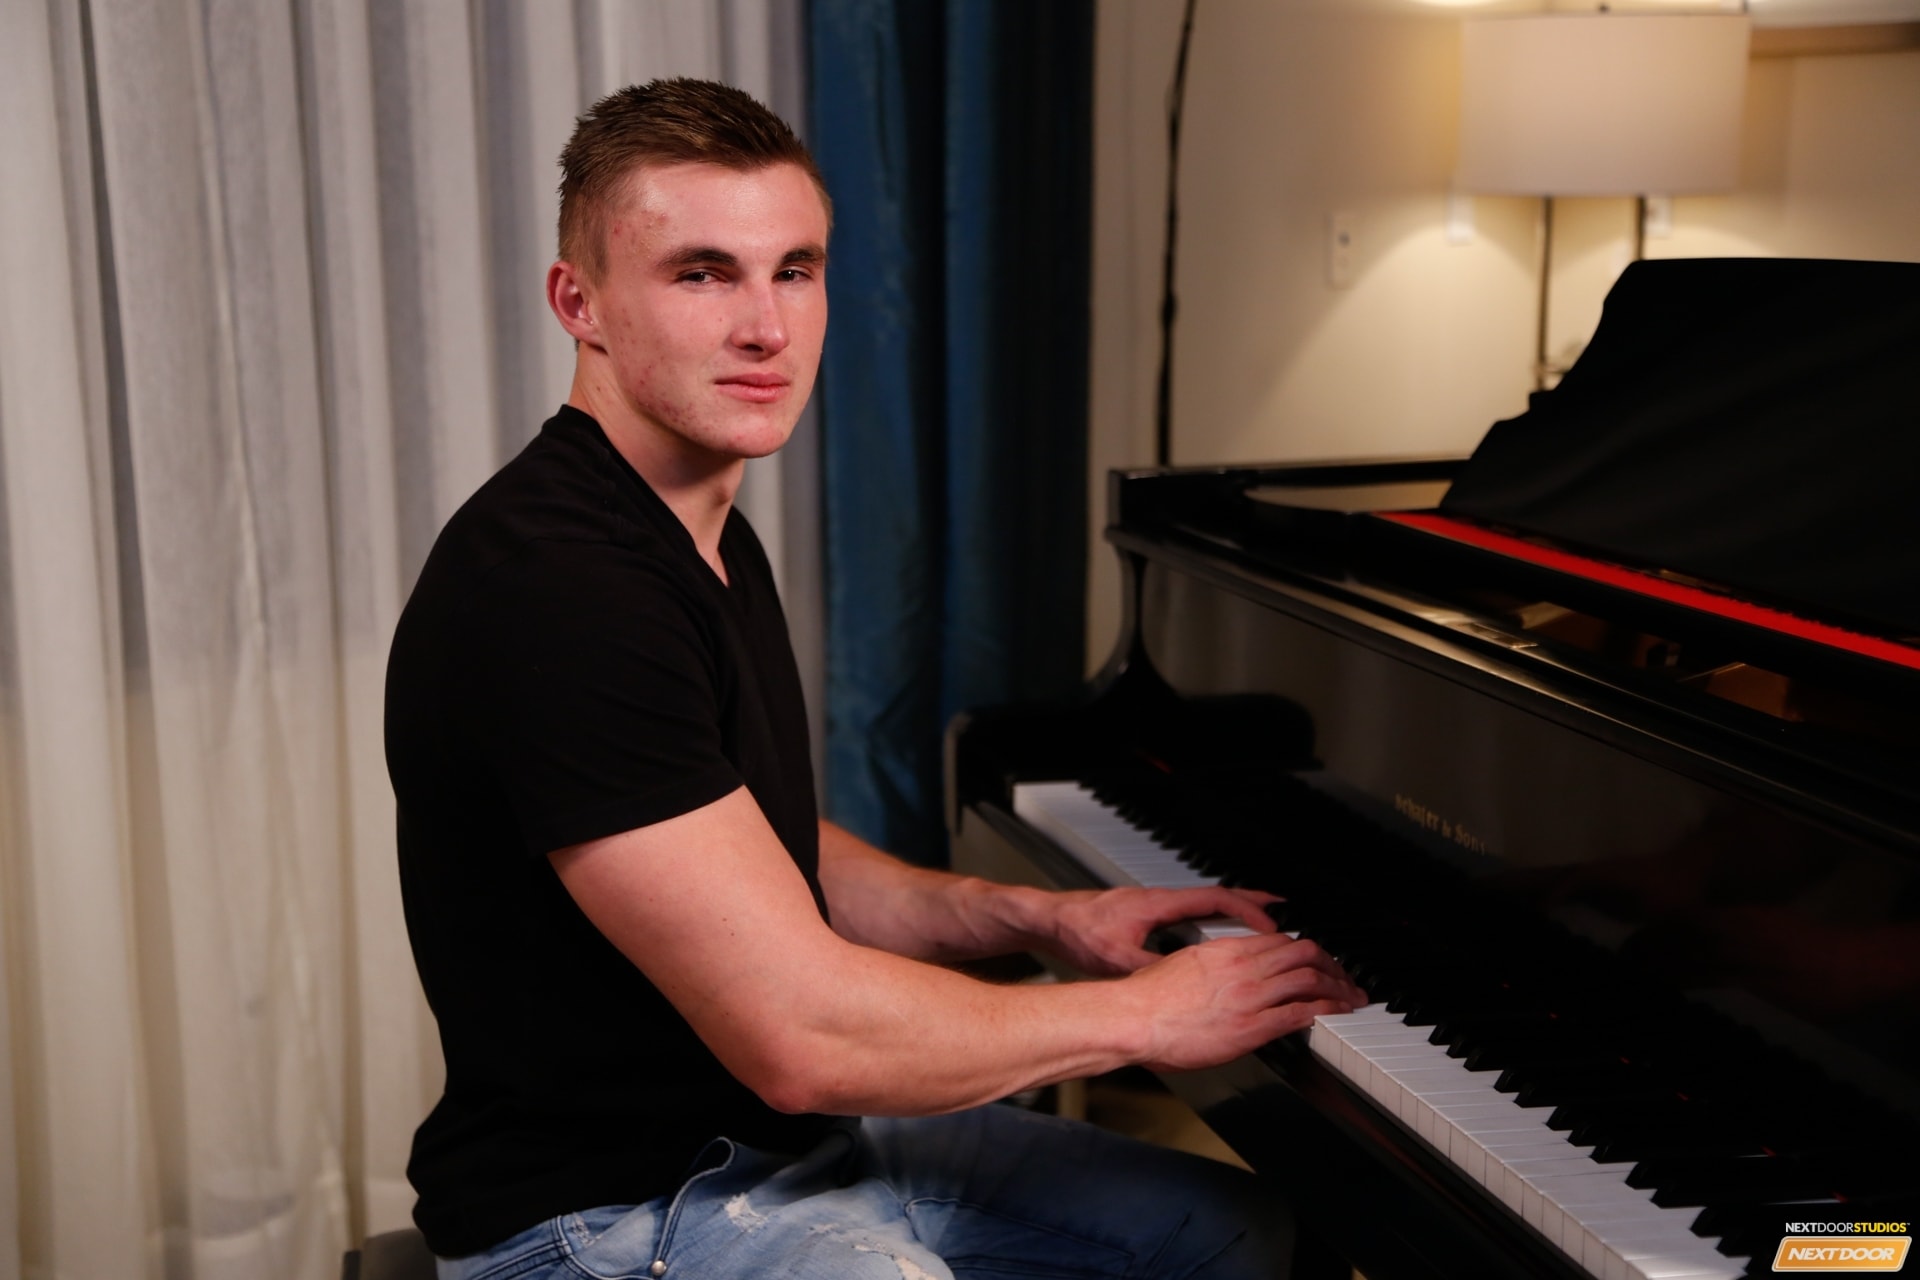 Next Door Studios 'The Piano Teacher' starring Alex Mecum (Photo 18)